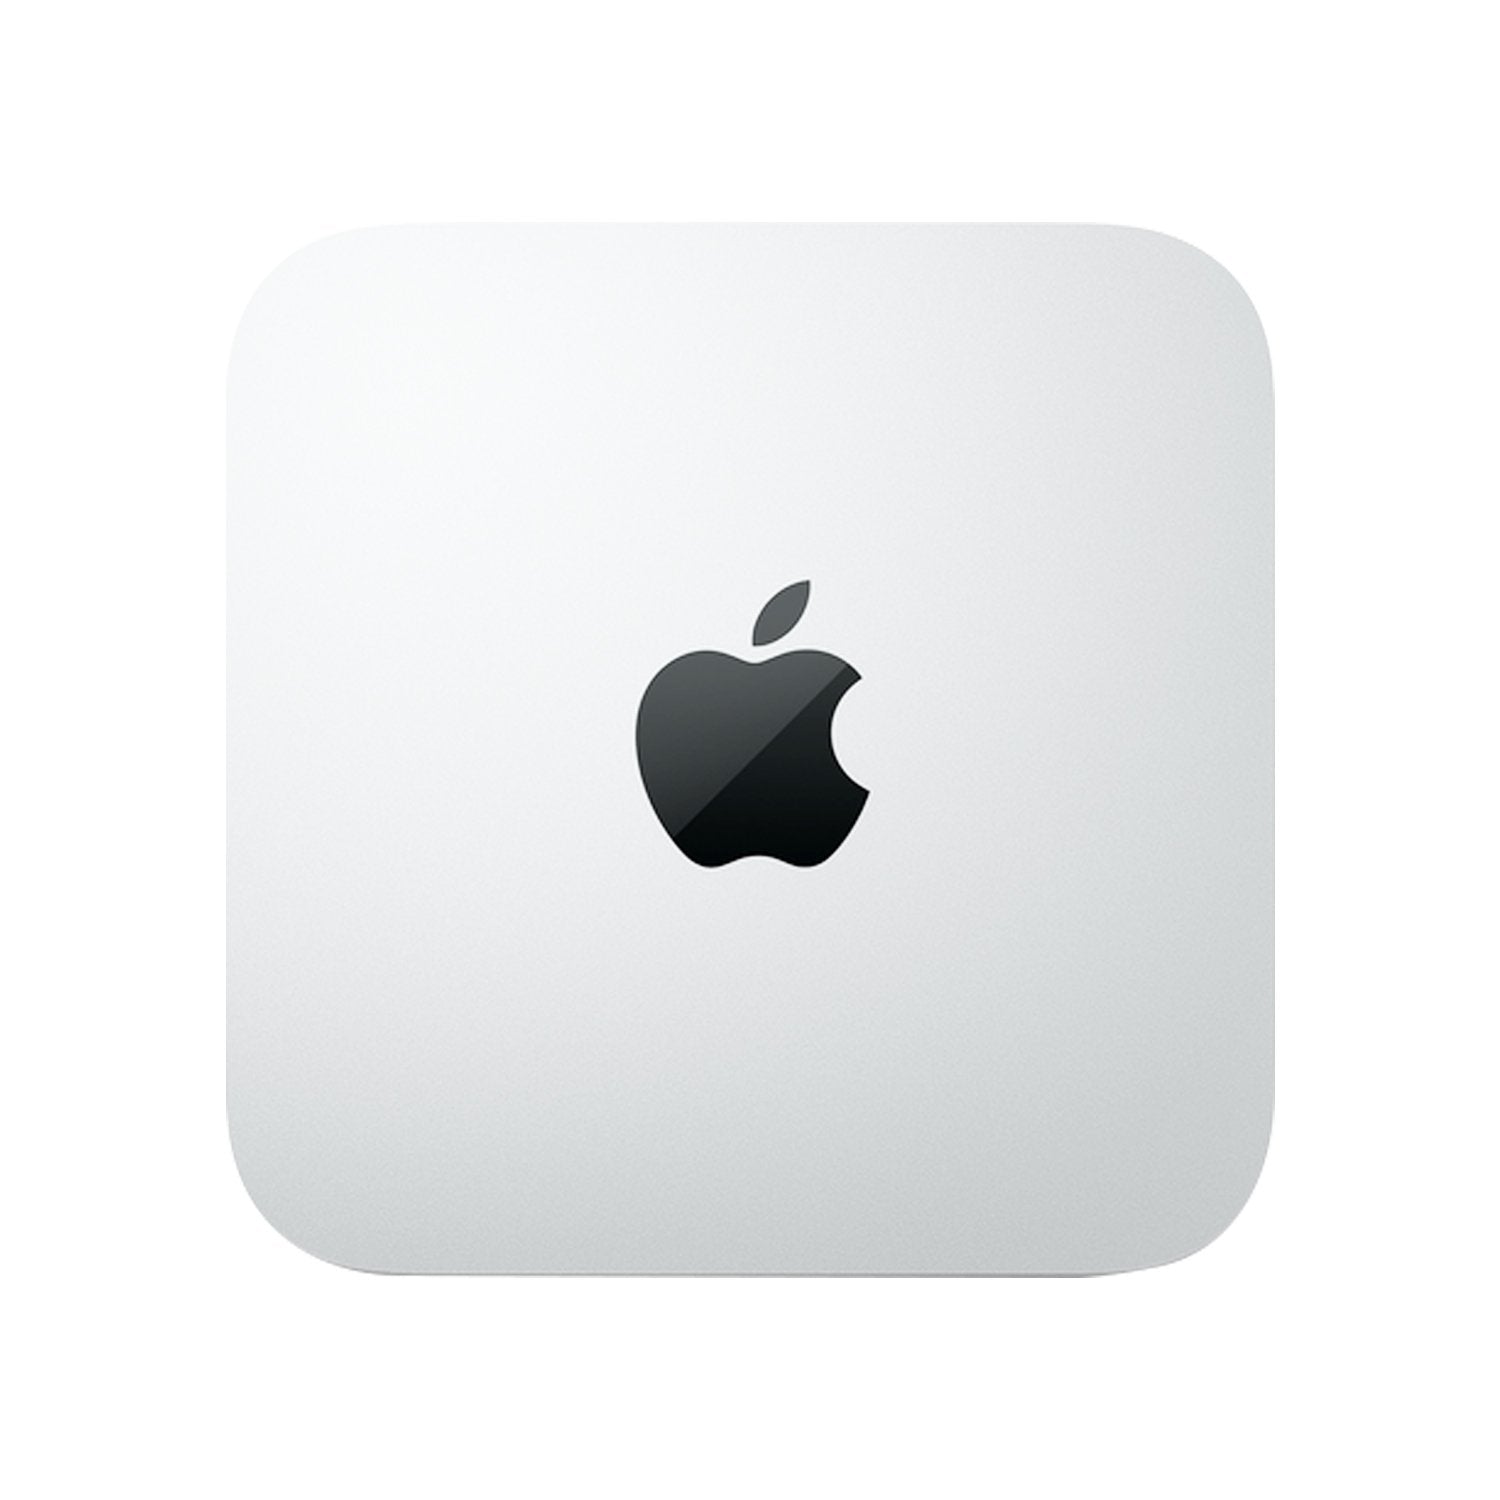 used mac mini 2014 australia